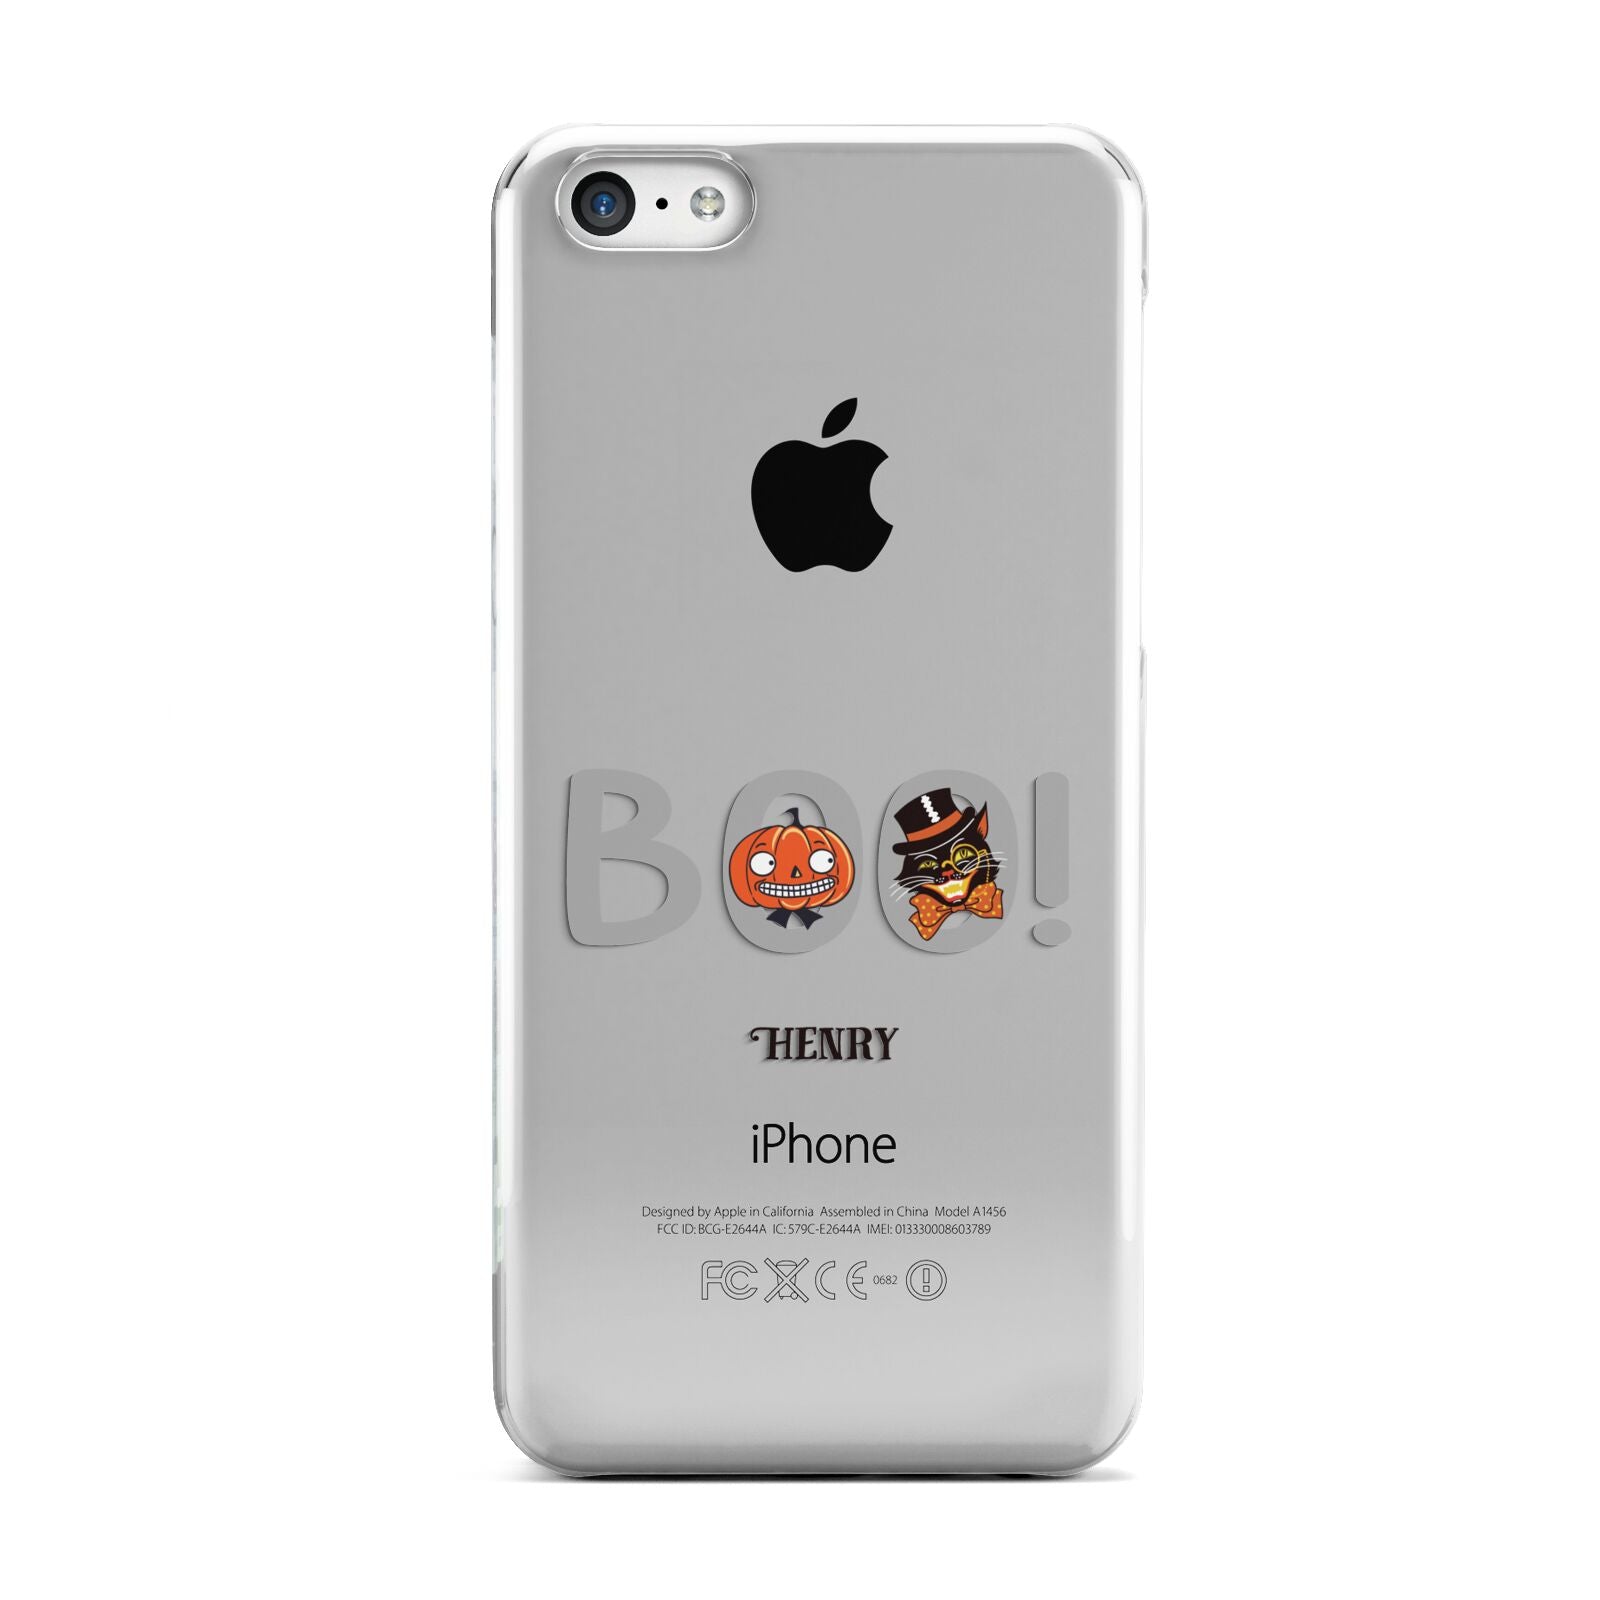 Boo Personalised Apple iPhone 5c Case